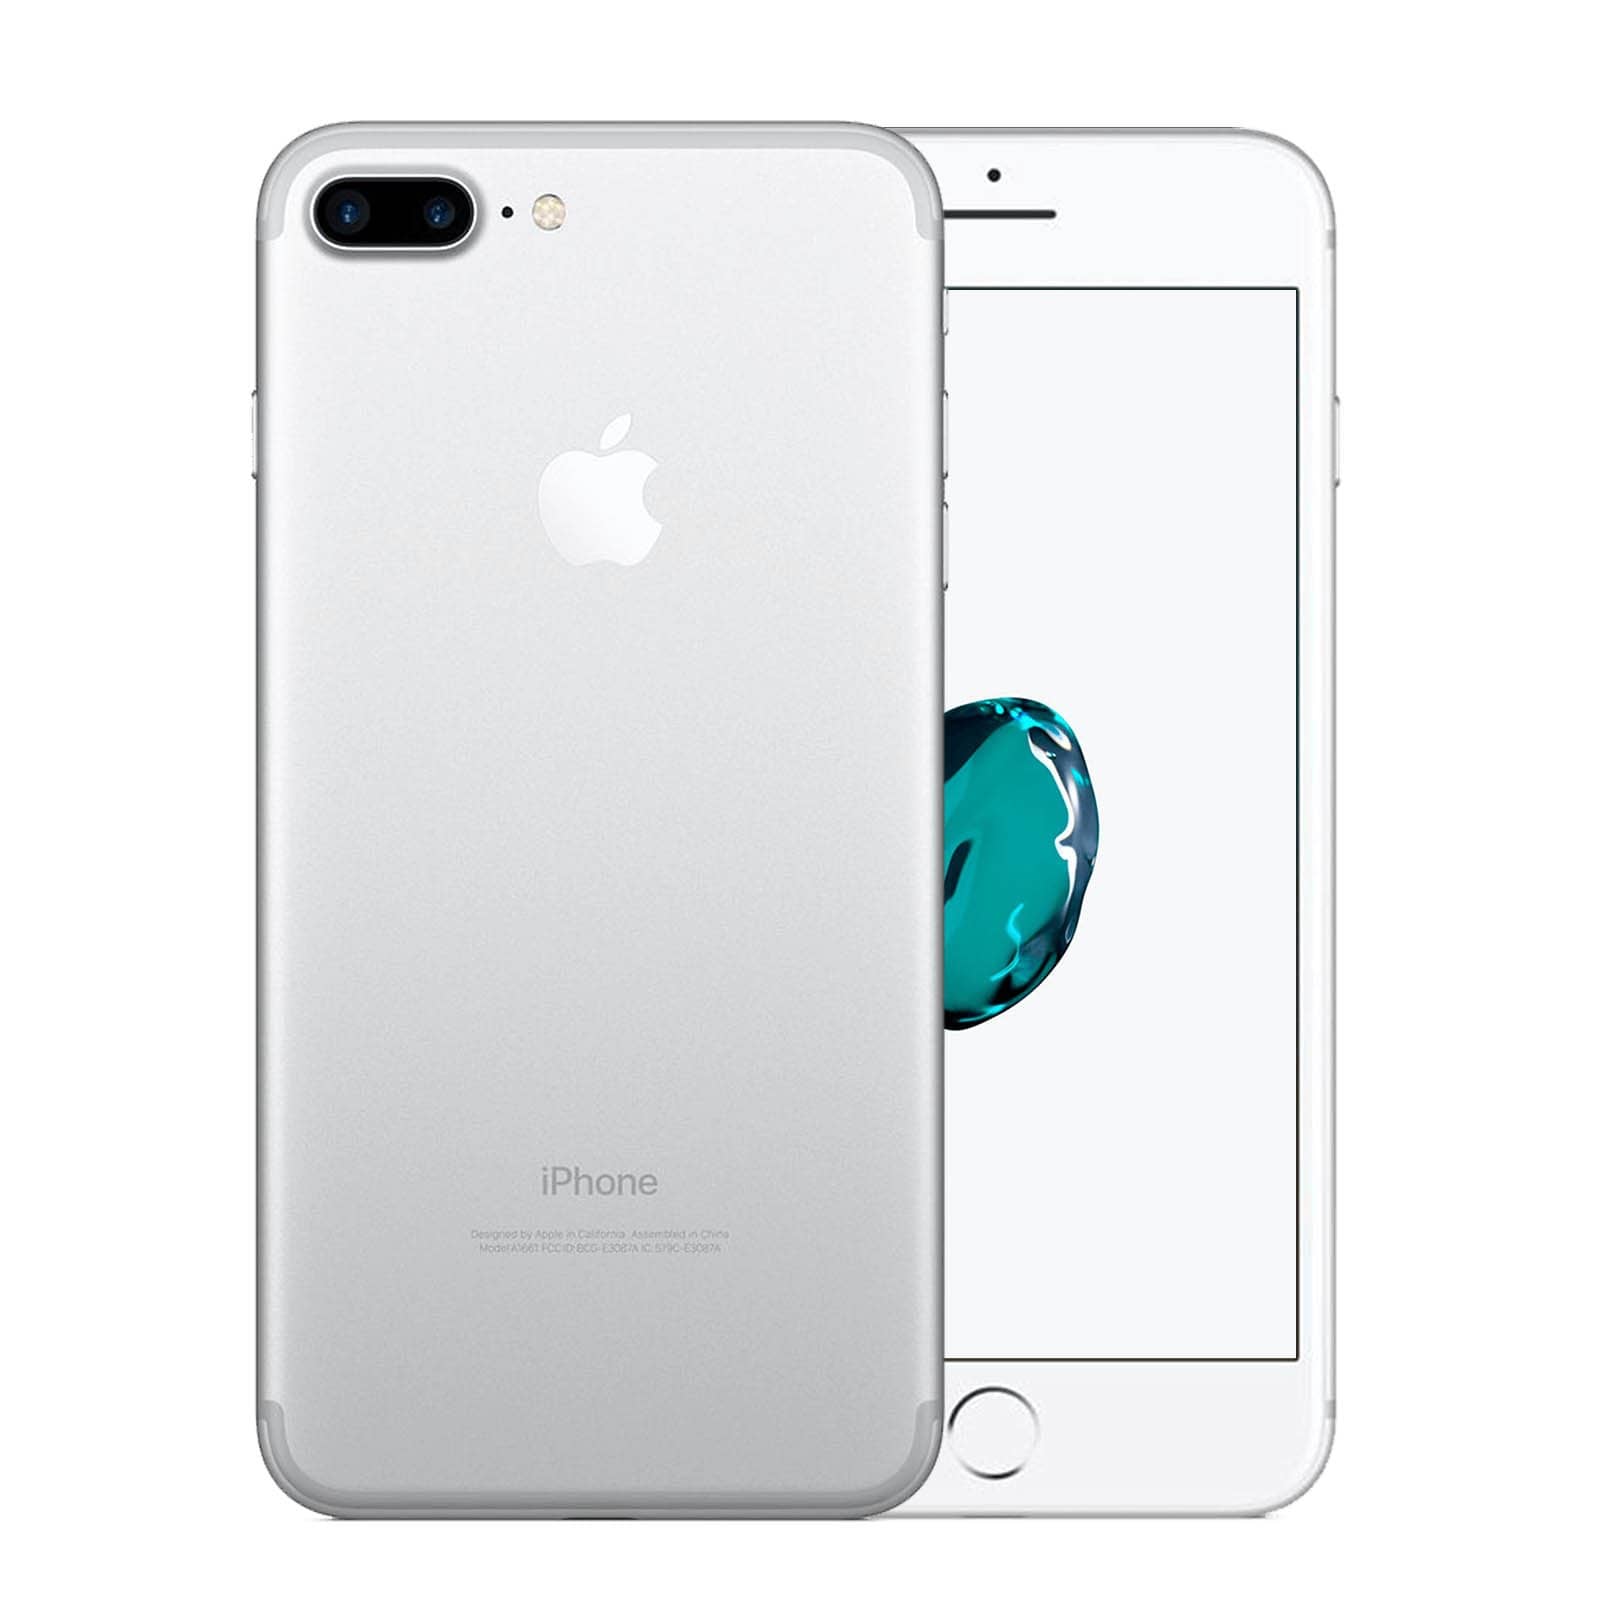 Apple iPhone 7 Plus 256GB Silver Good - Unlocked 256GB Silver Good